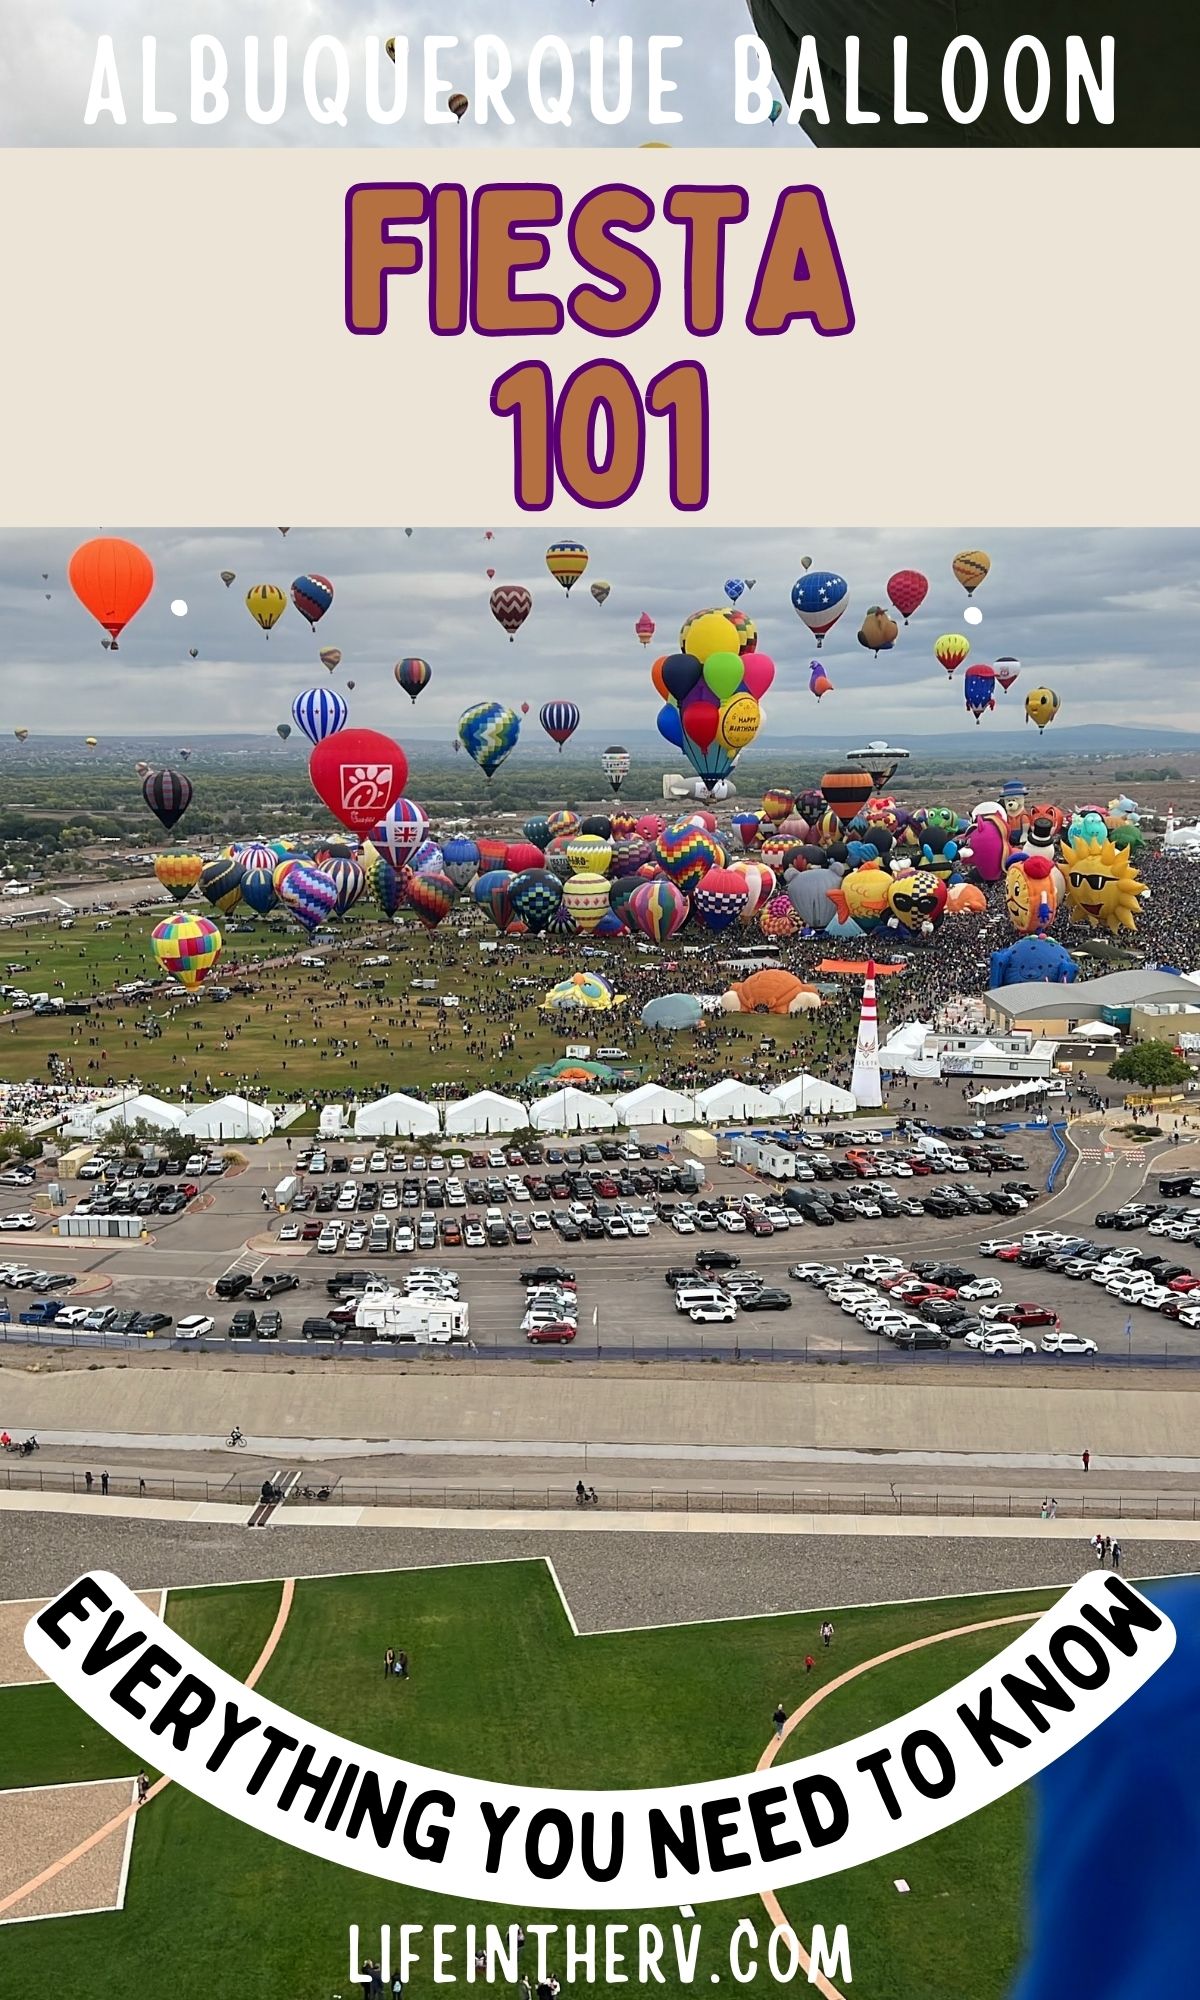 Albuquerque balloon fiesta 101 everything you need to know.